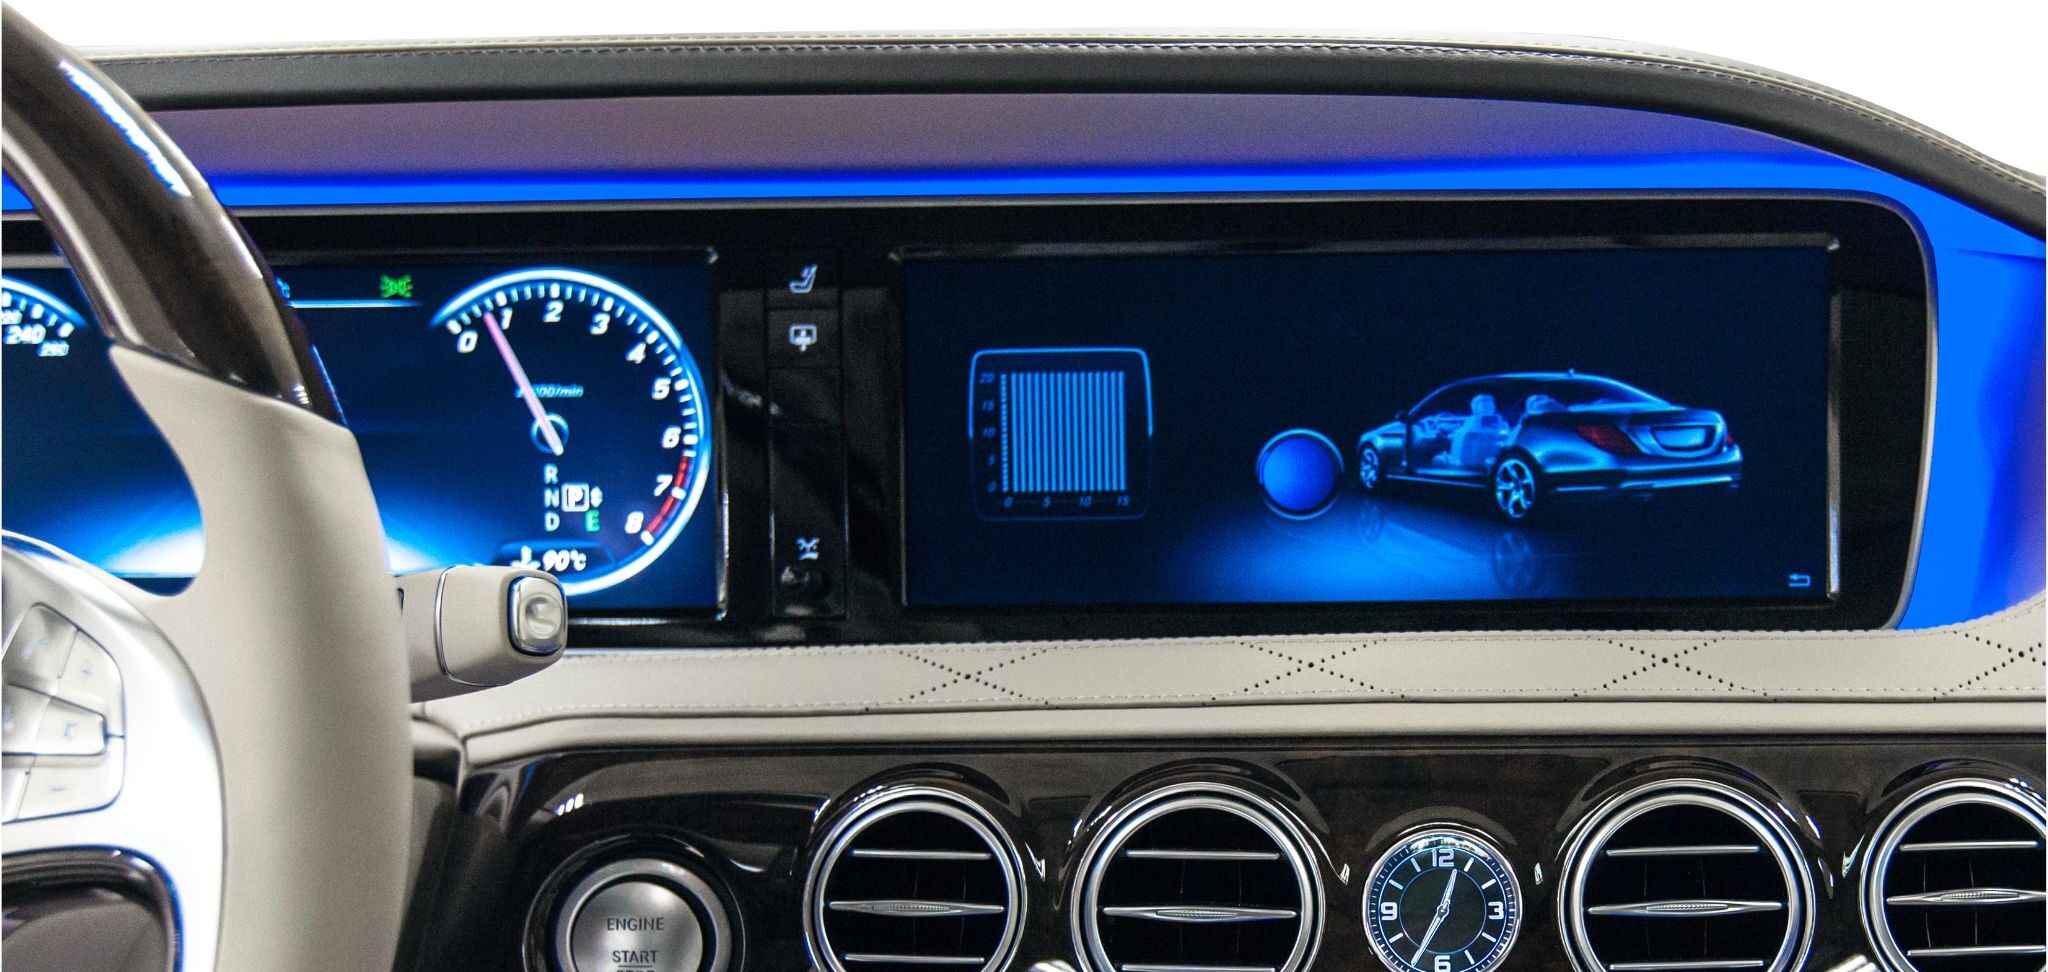 A modern vehicle infotainment center photo taken from inside the car.